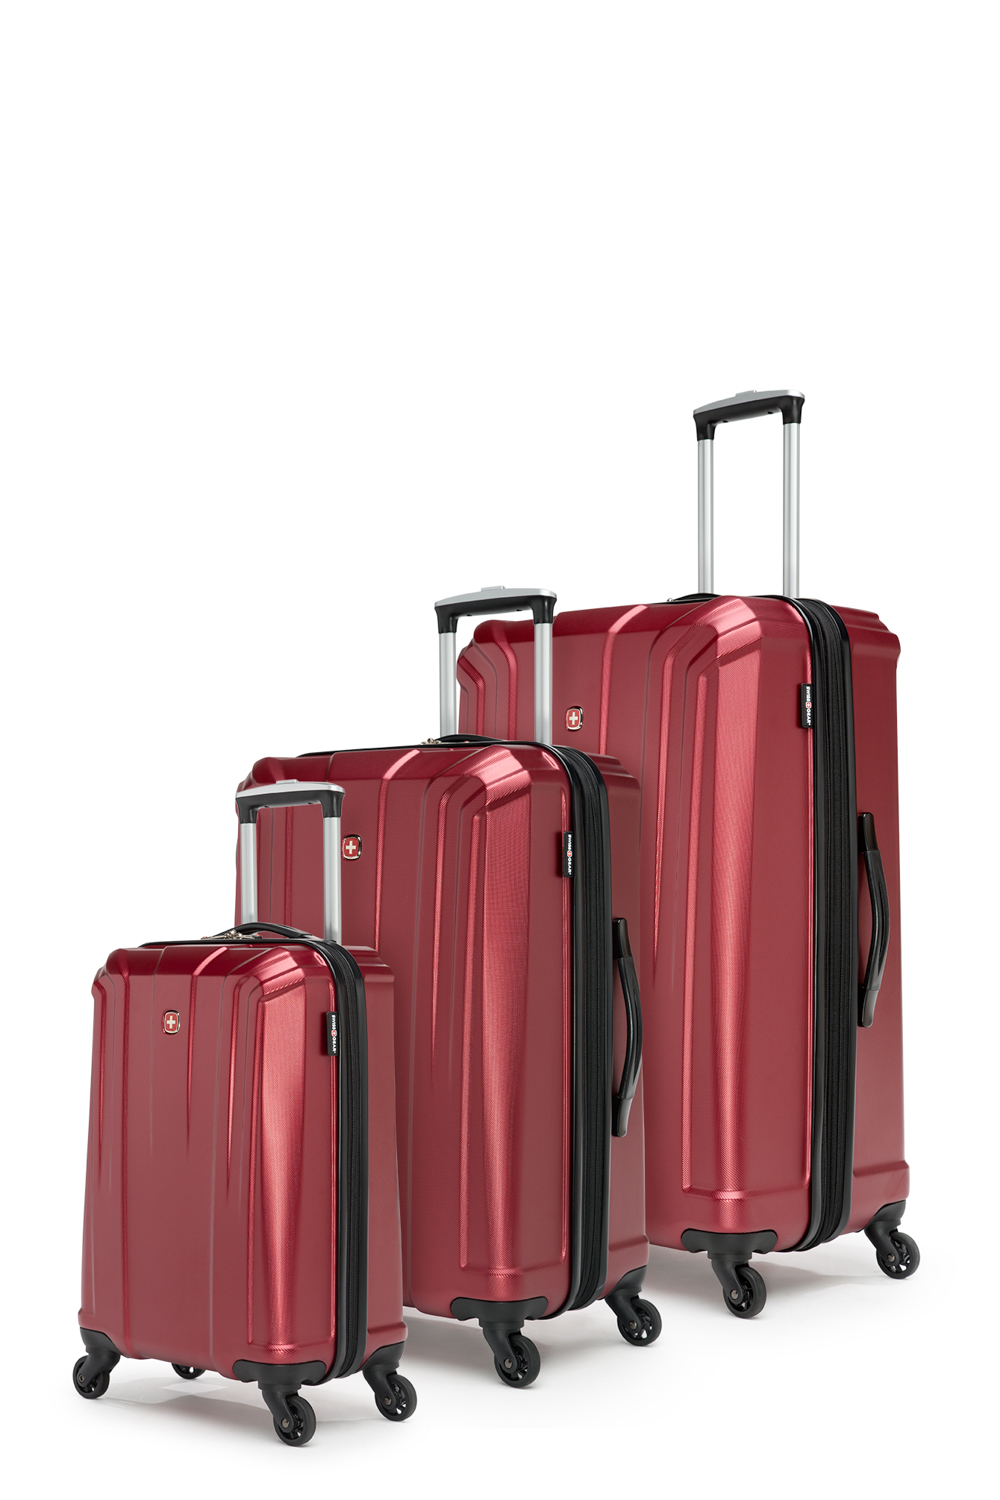 Swissgear Destination Collection Expandable Hardside Luggage 3 Piece Set